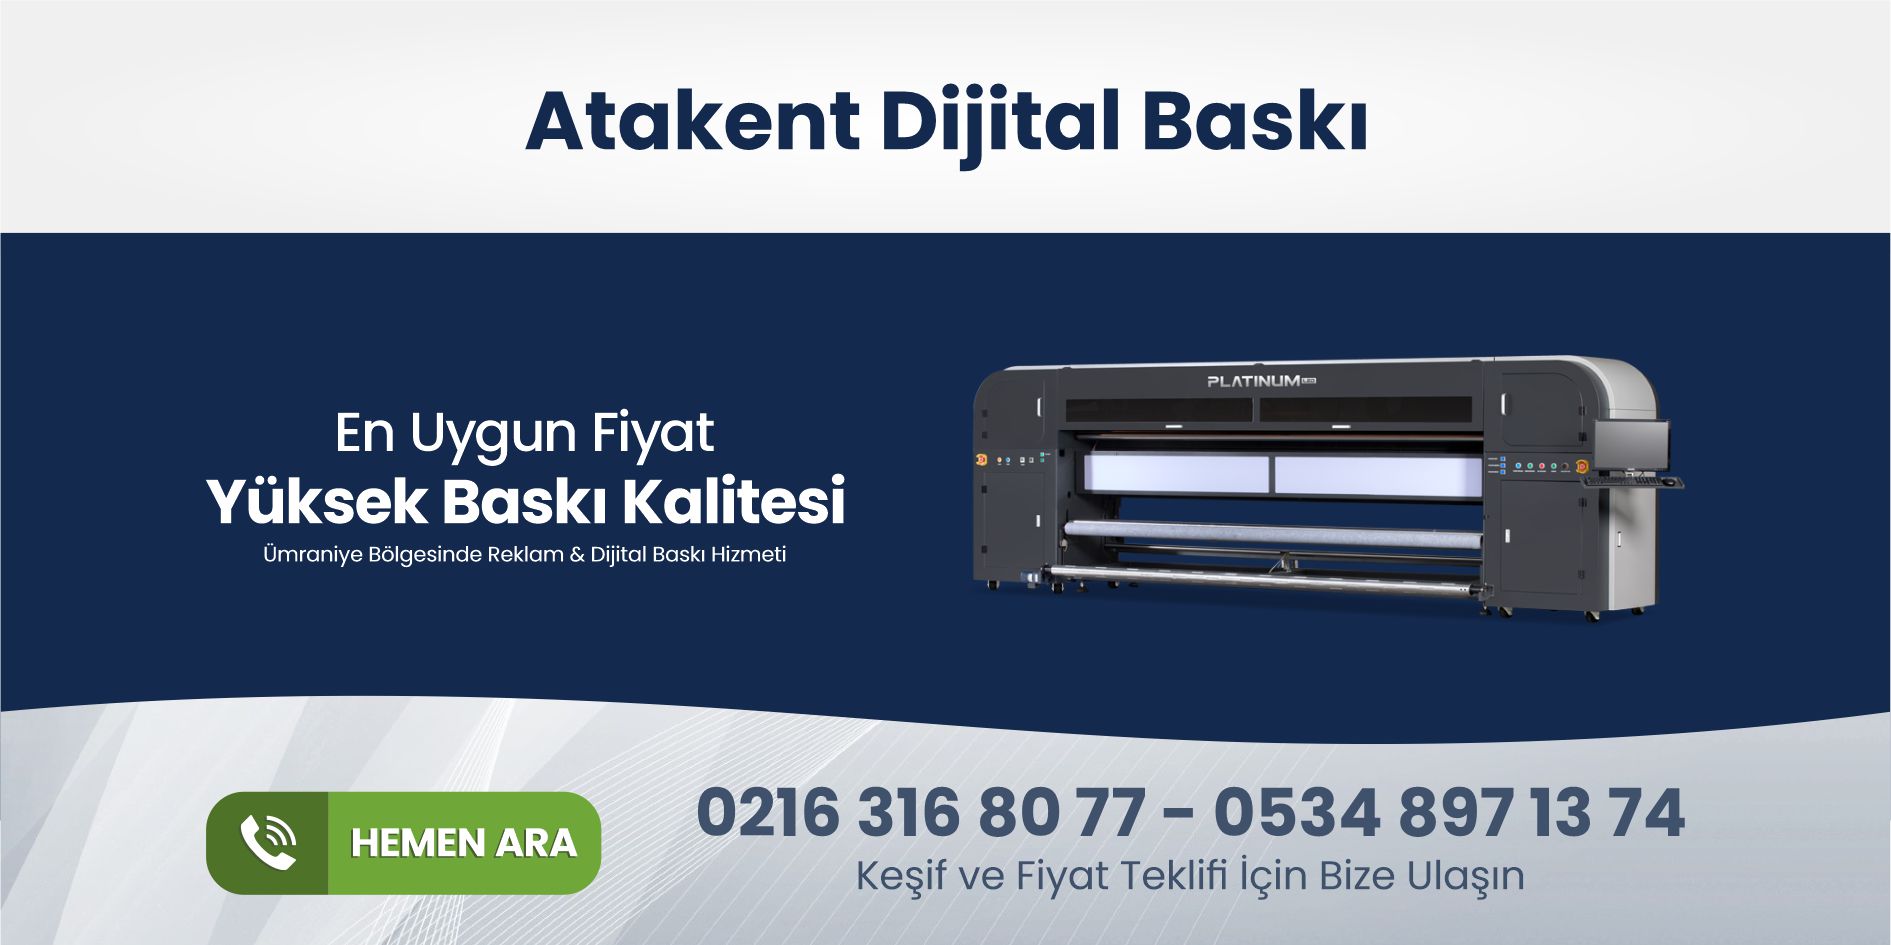 You are currently viewing Atakent Dijital Baskı